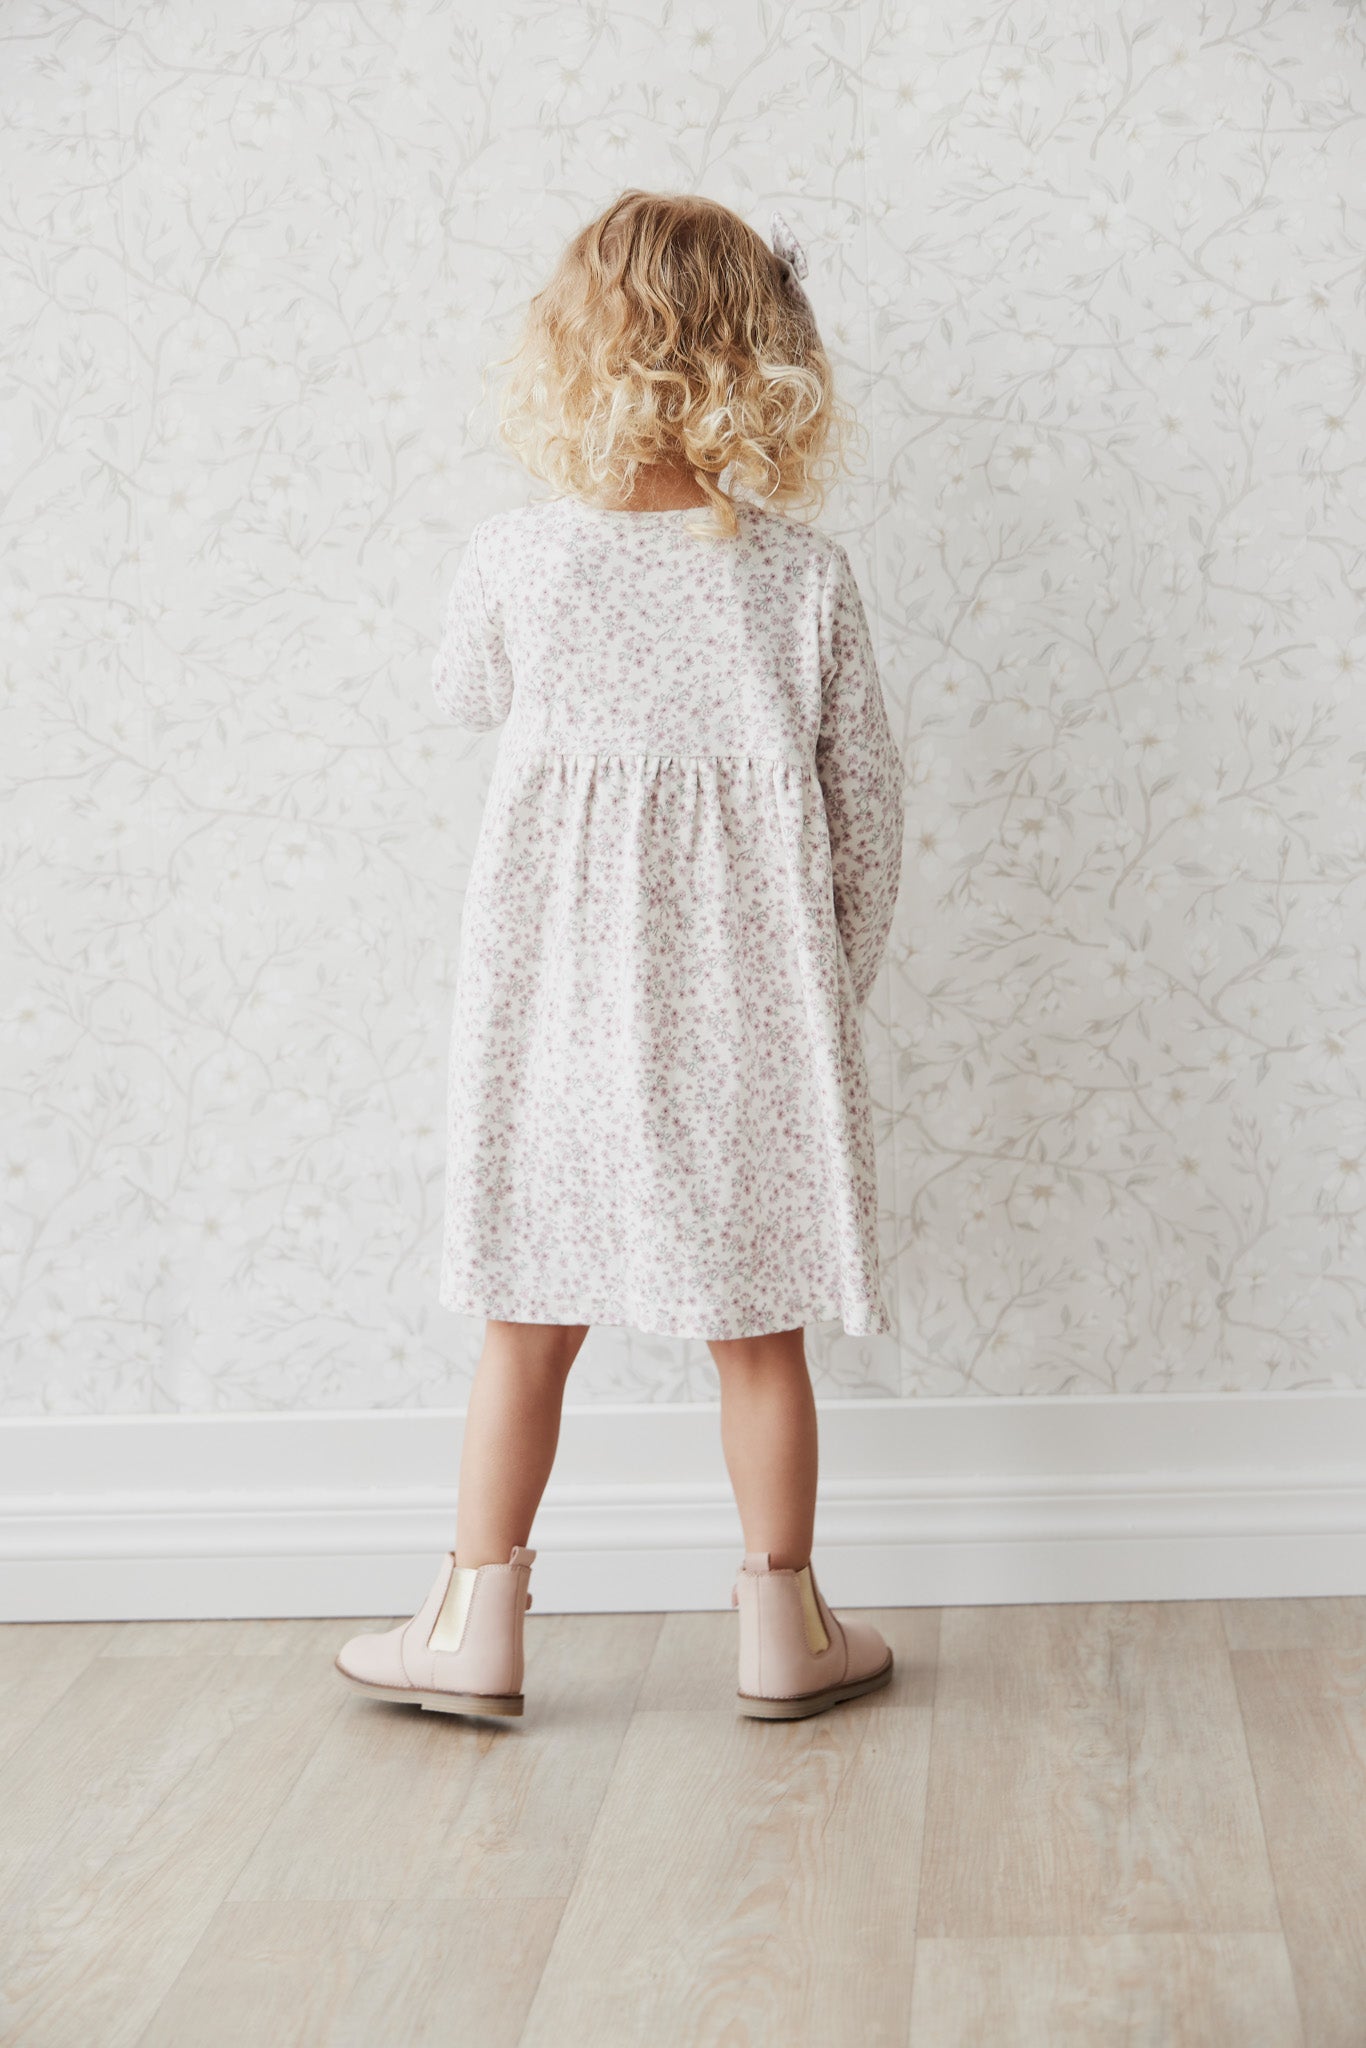 Jamie Kay Organic Cotton Legging - Daisy Floral - CLOTHING-BABY